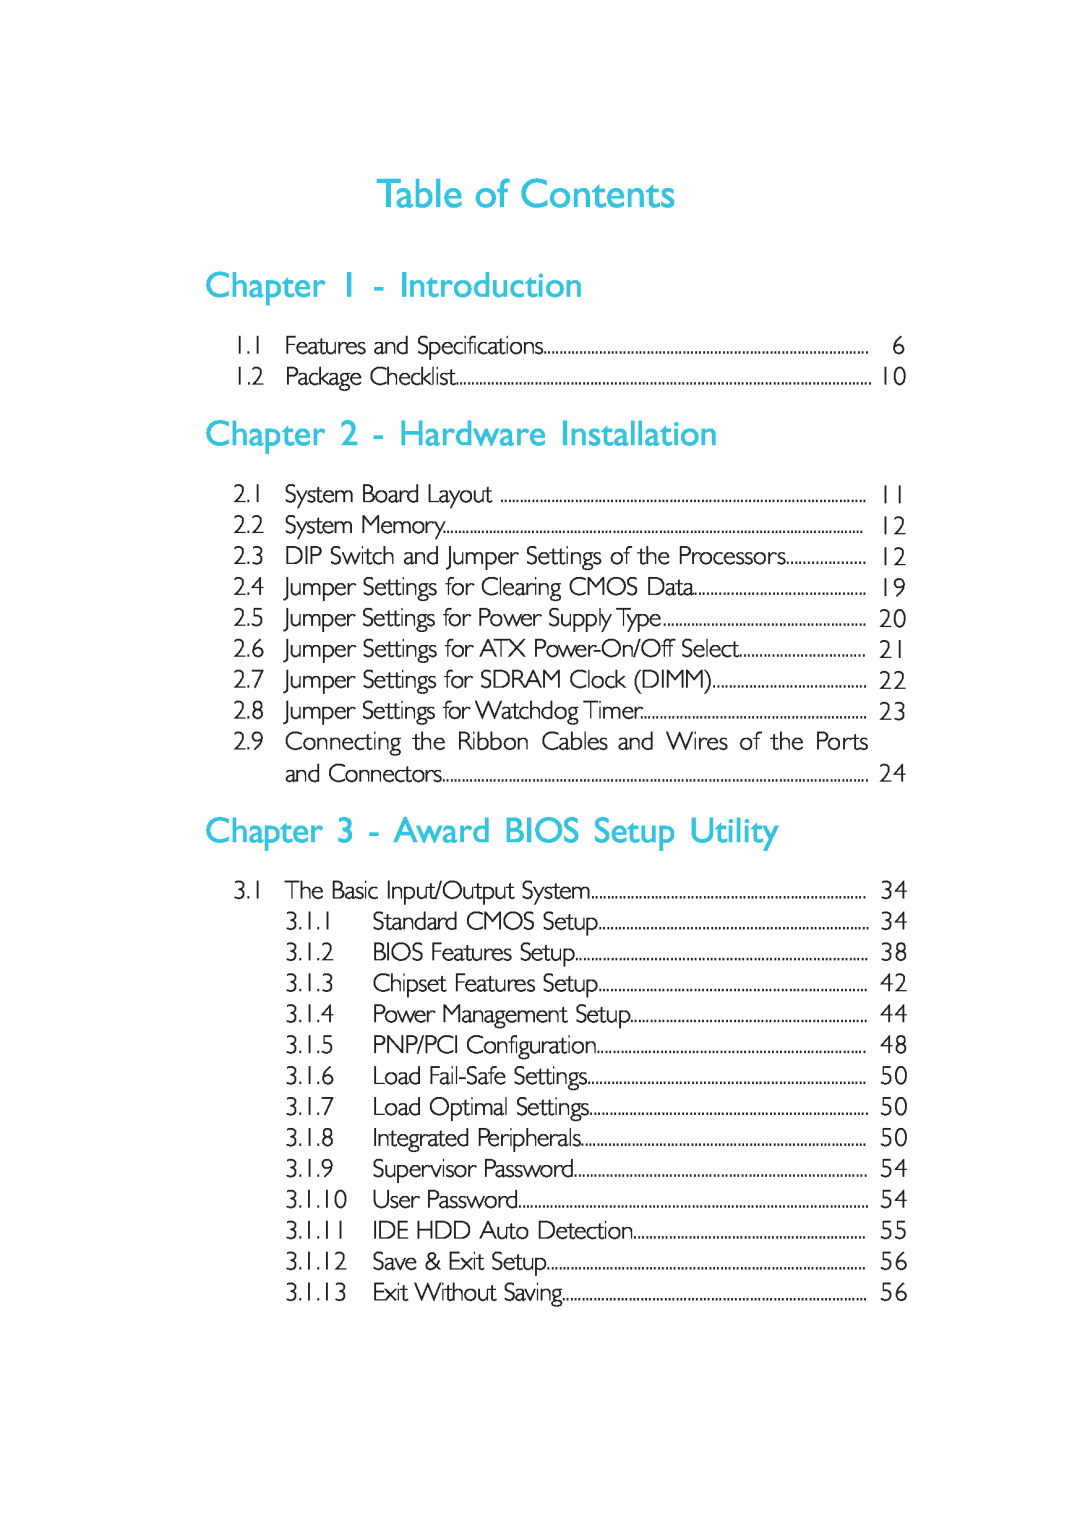 Microsoft G7VP2 manual Table of Contents, Introduction, Hardware Installation, Award BIOS Setup Utility 